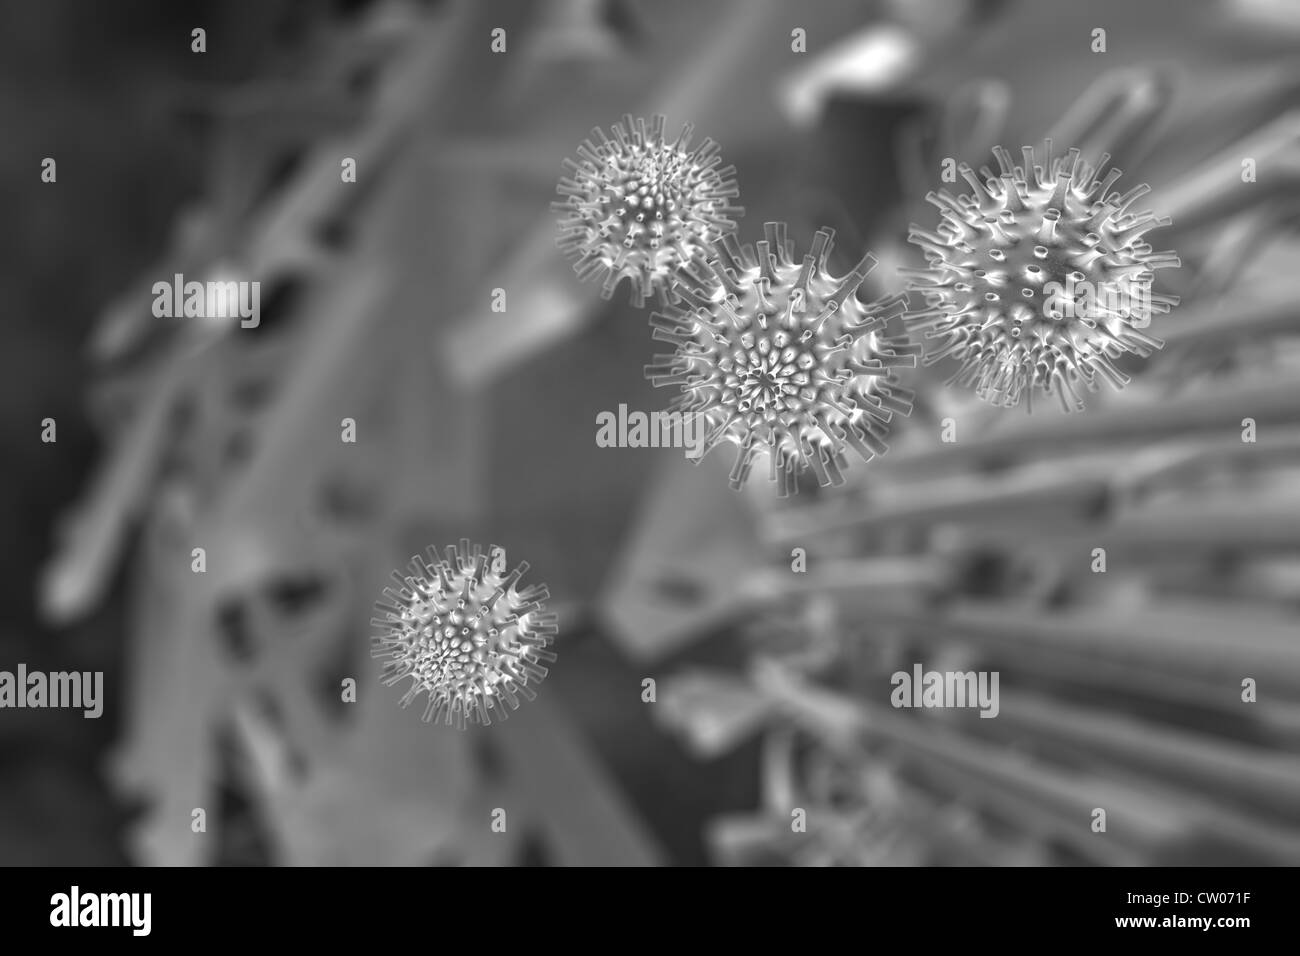 Viruses - Scanning Electron Microscopy stylised Stock Photo